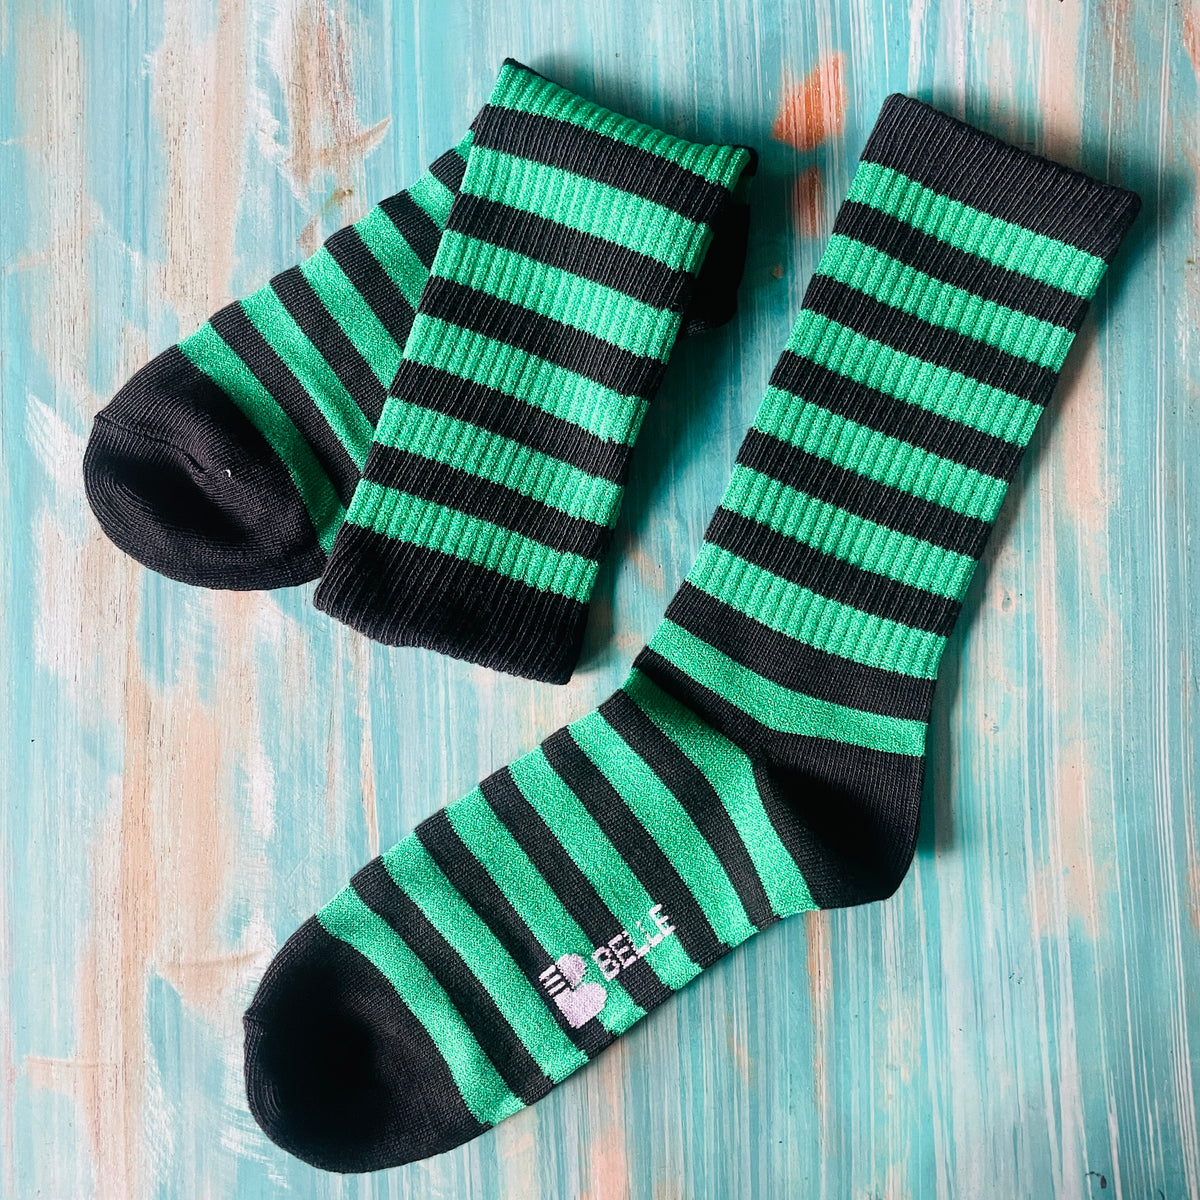 Mid legs-Green/Black striped